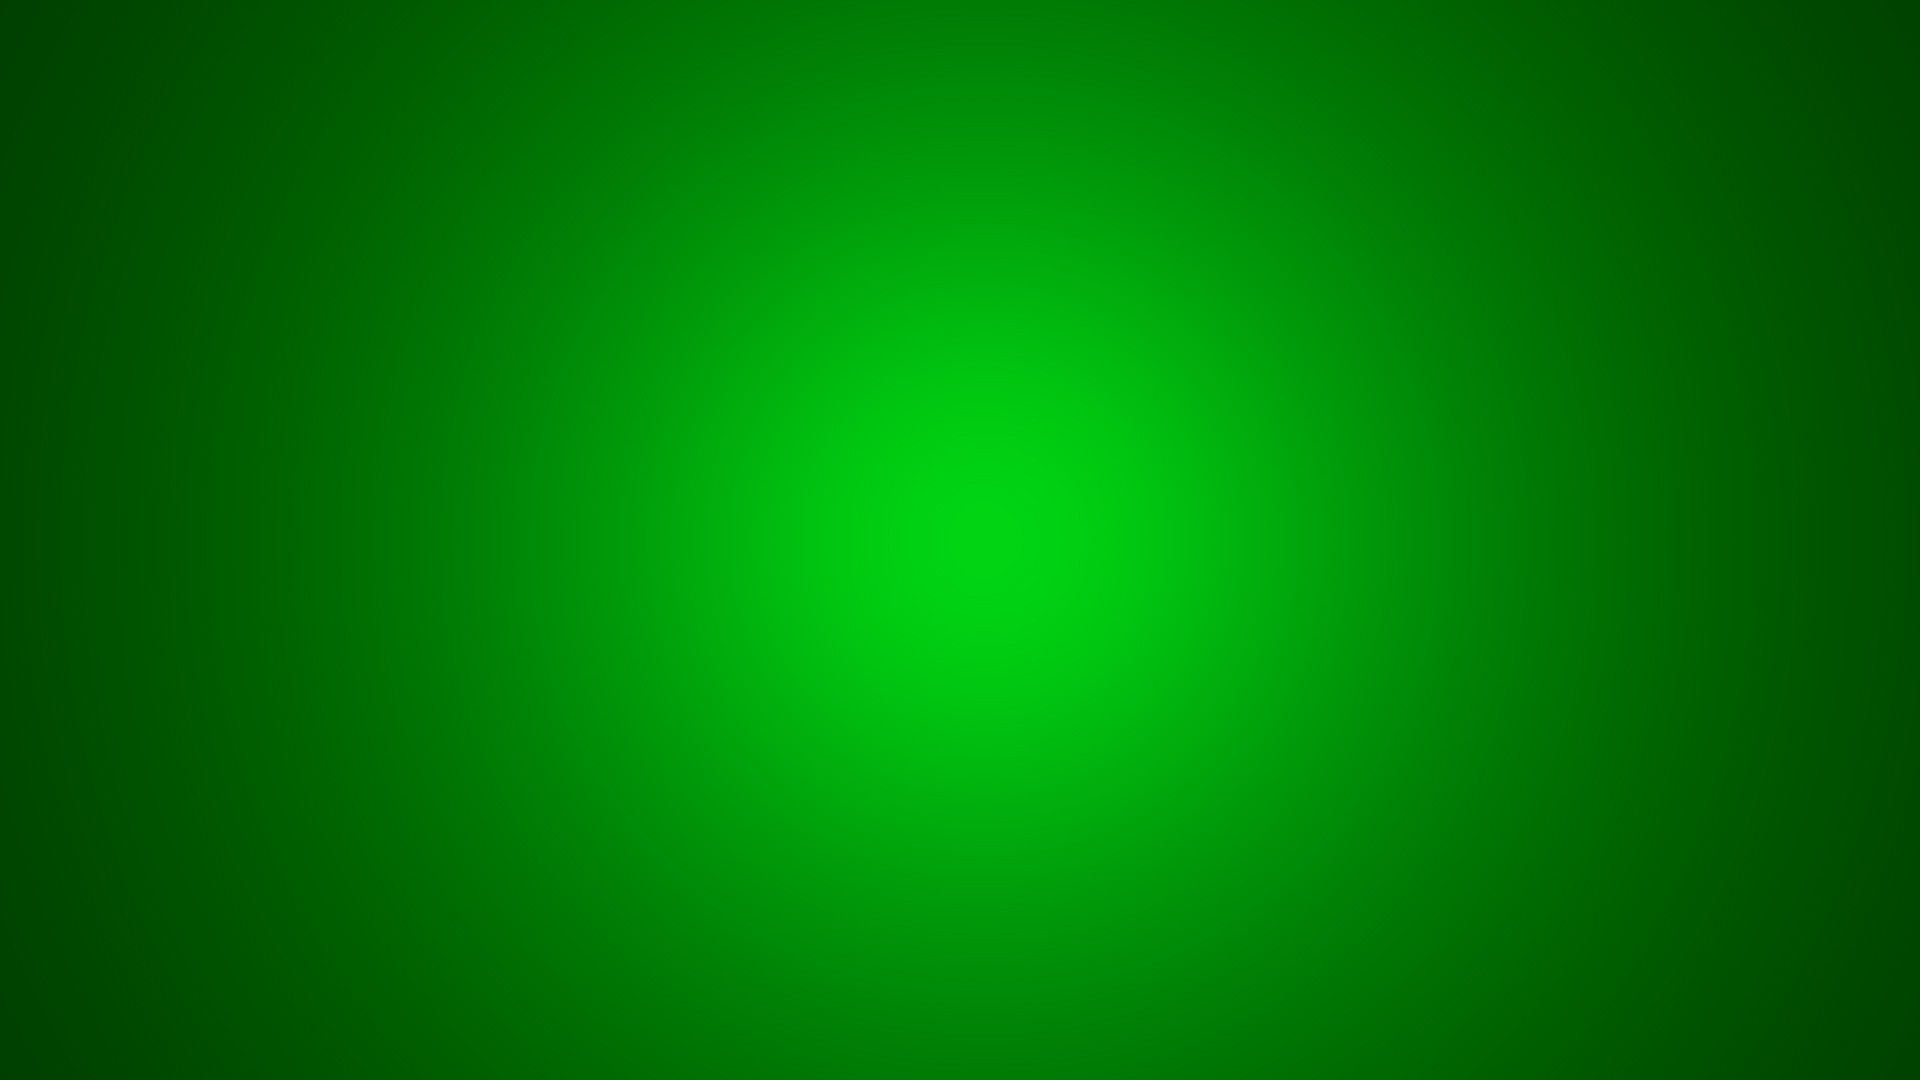 Plain Green Background Wallpaper